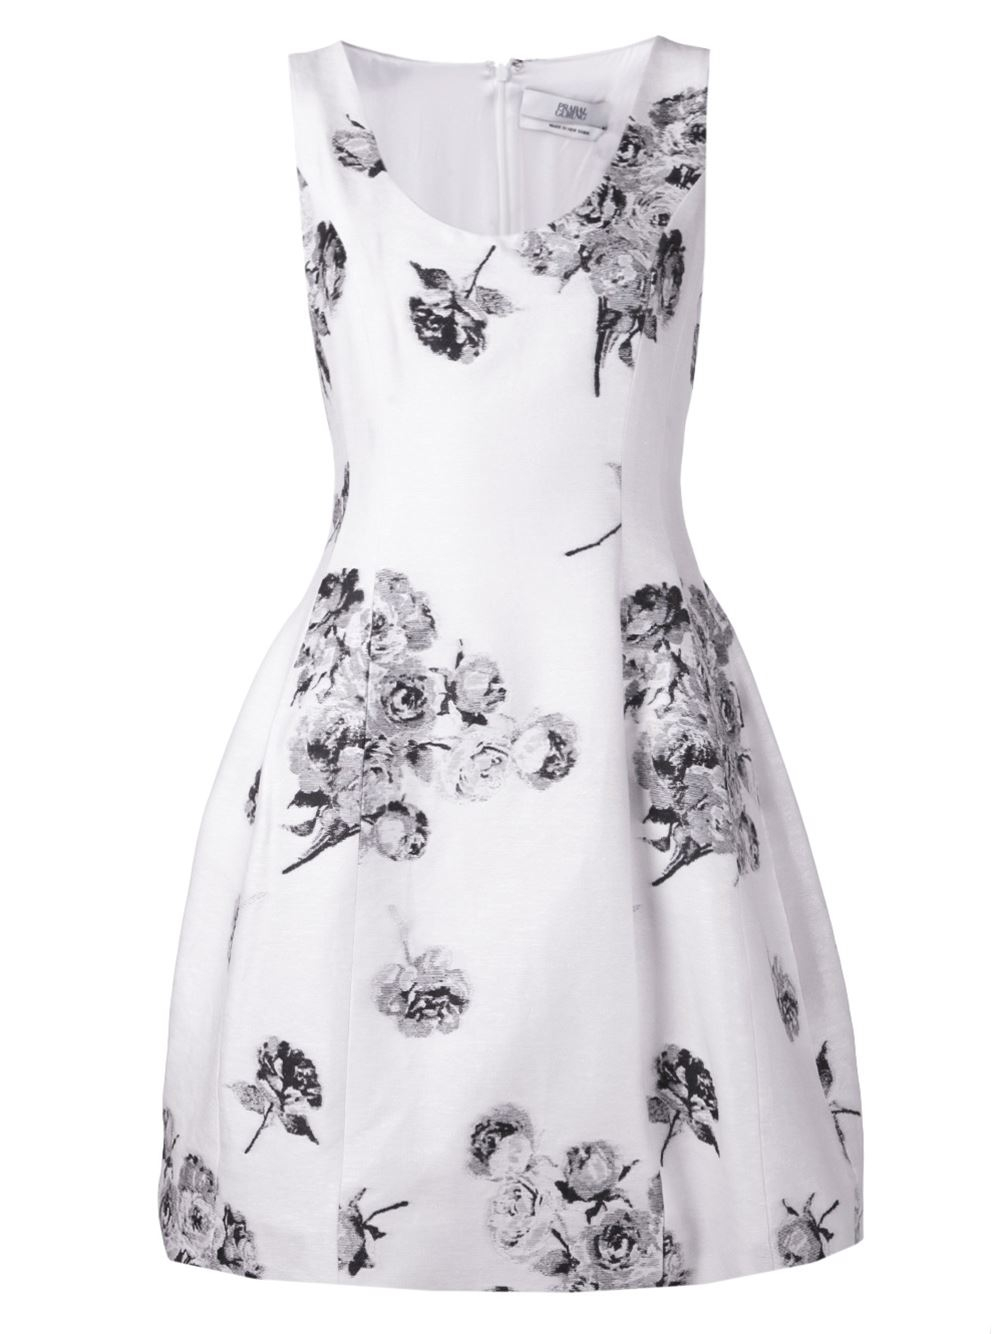 Prabal gurung Floral Jacquard Print Dress in White | Lyst